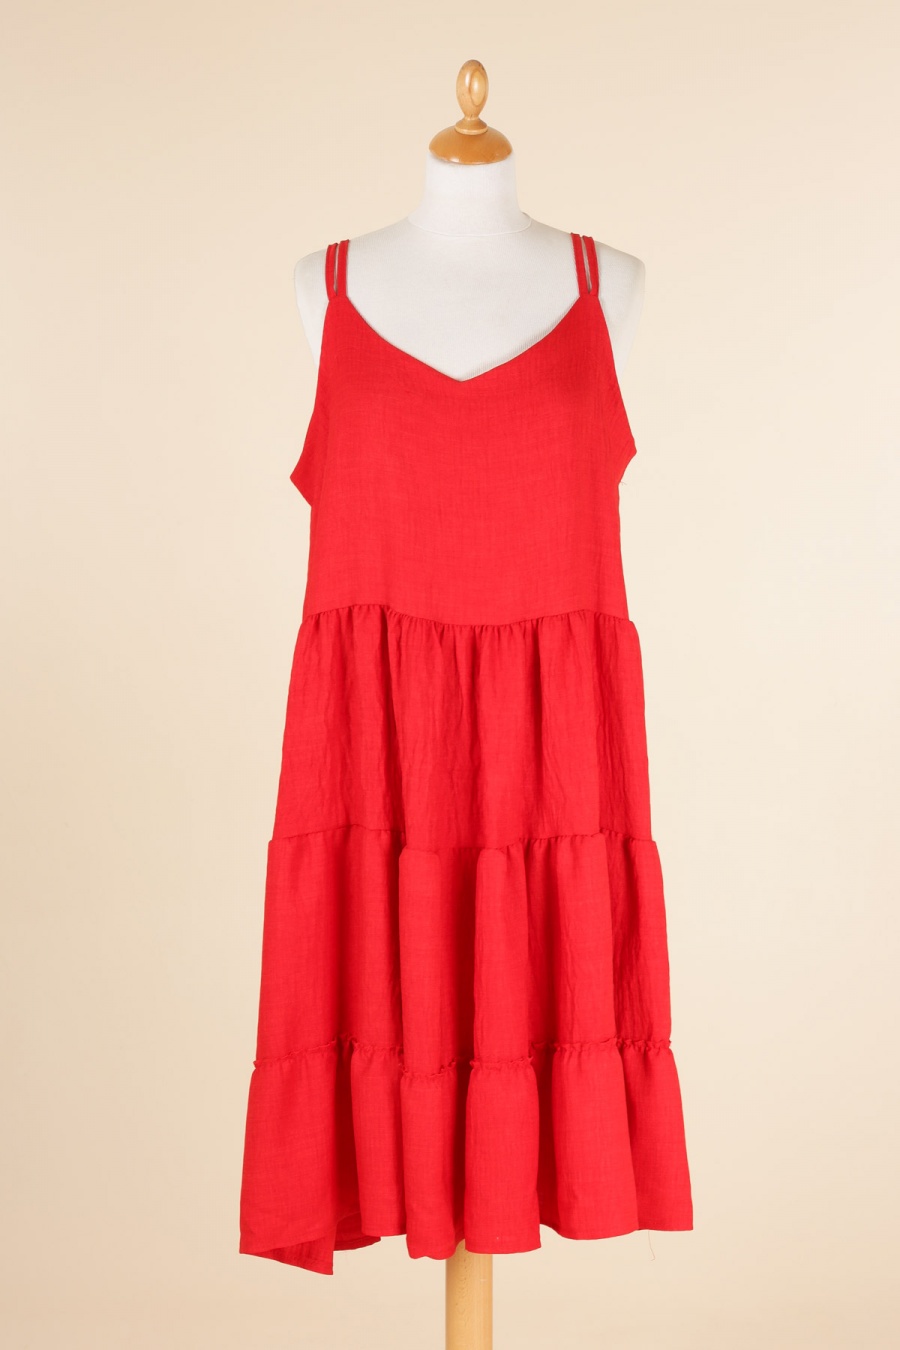 robe rouge grande taille 46 au 60 marque 2w paris r1523